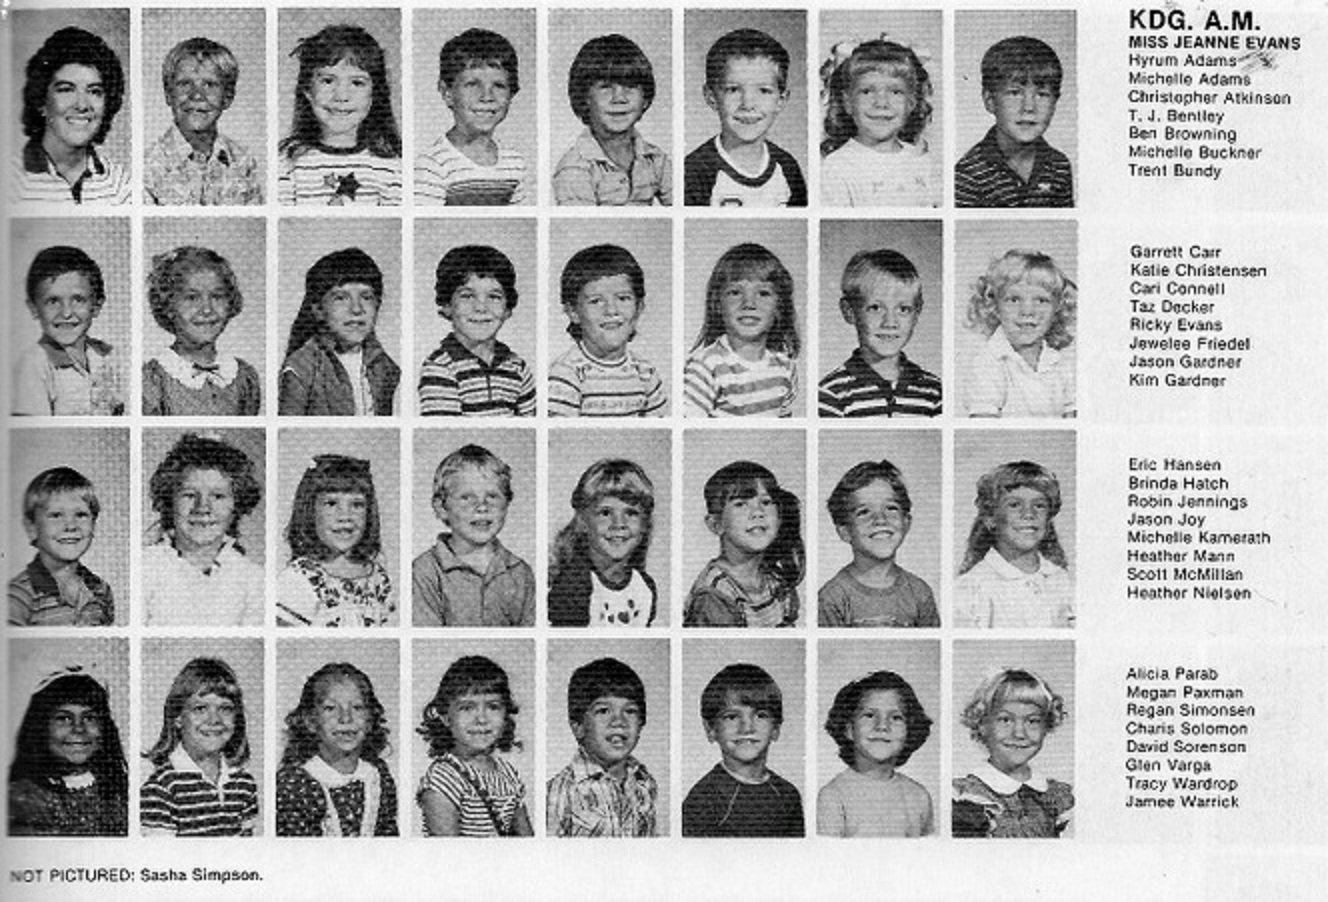 Miss Jeanne Evan's 1984-1985 AM kindergarten class at East Elementary School